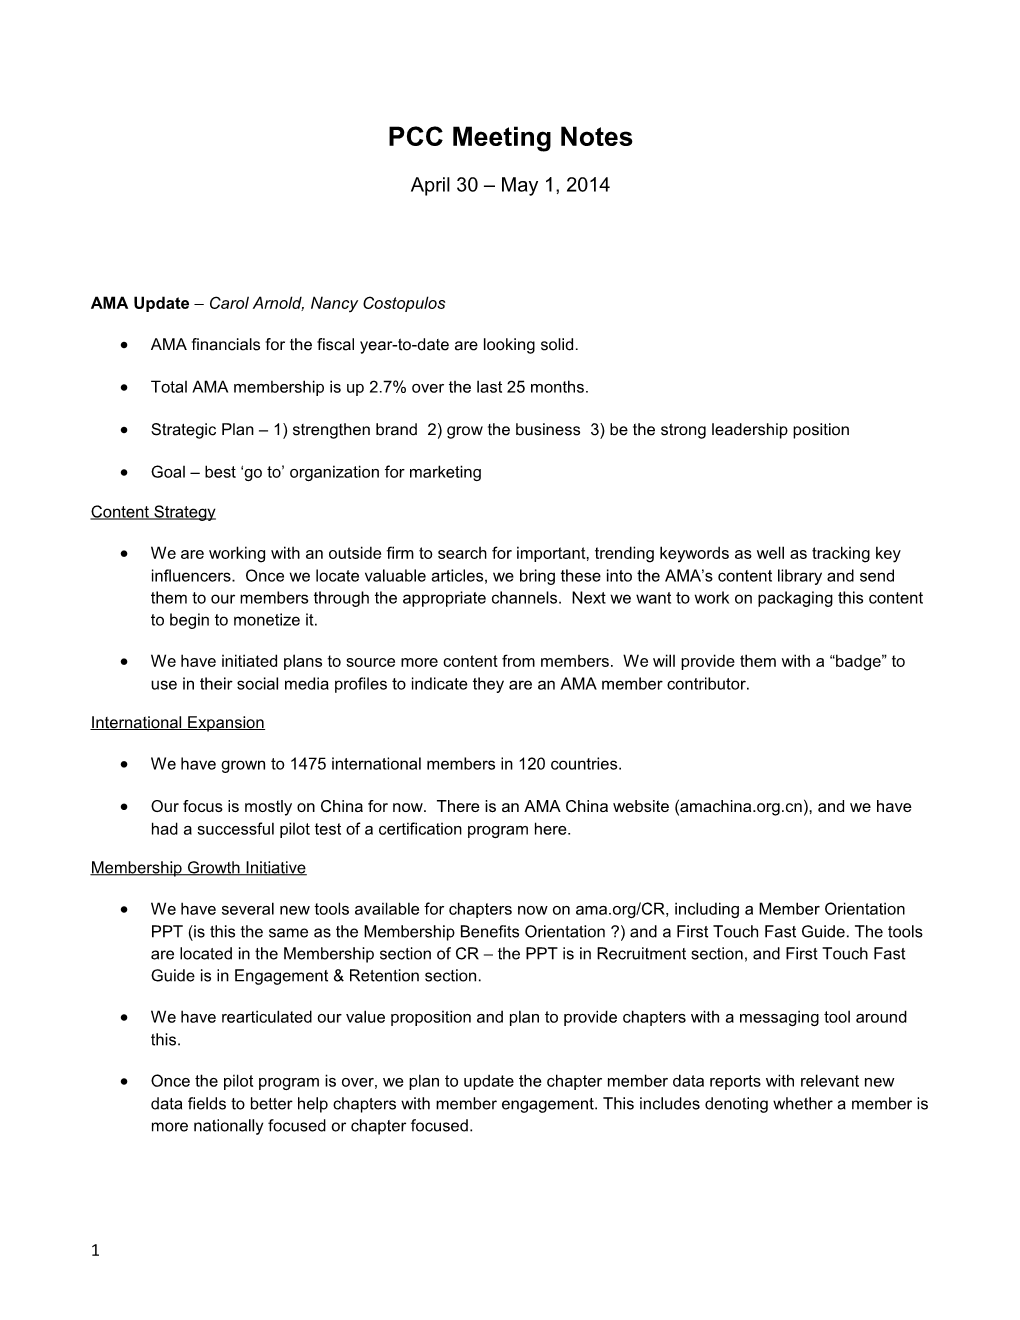 PCC-Meeting-Notes-Apr-2014